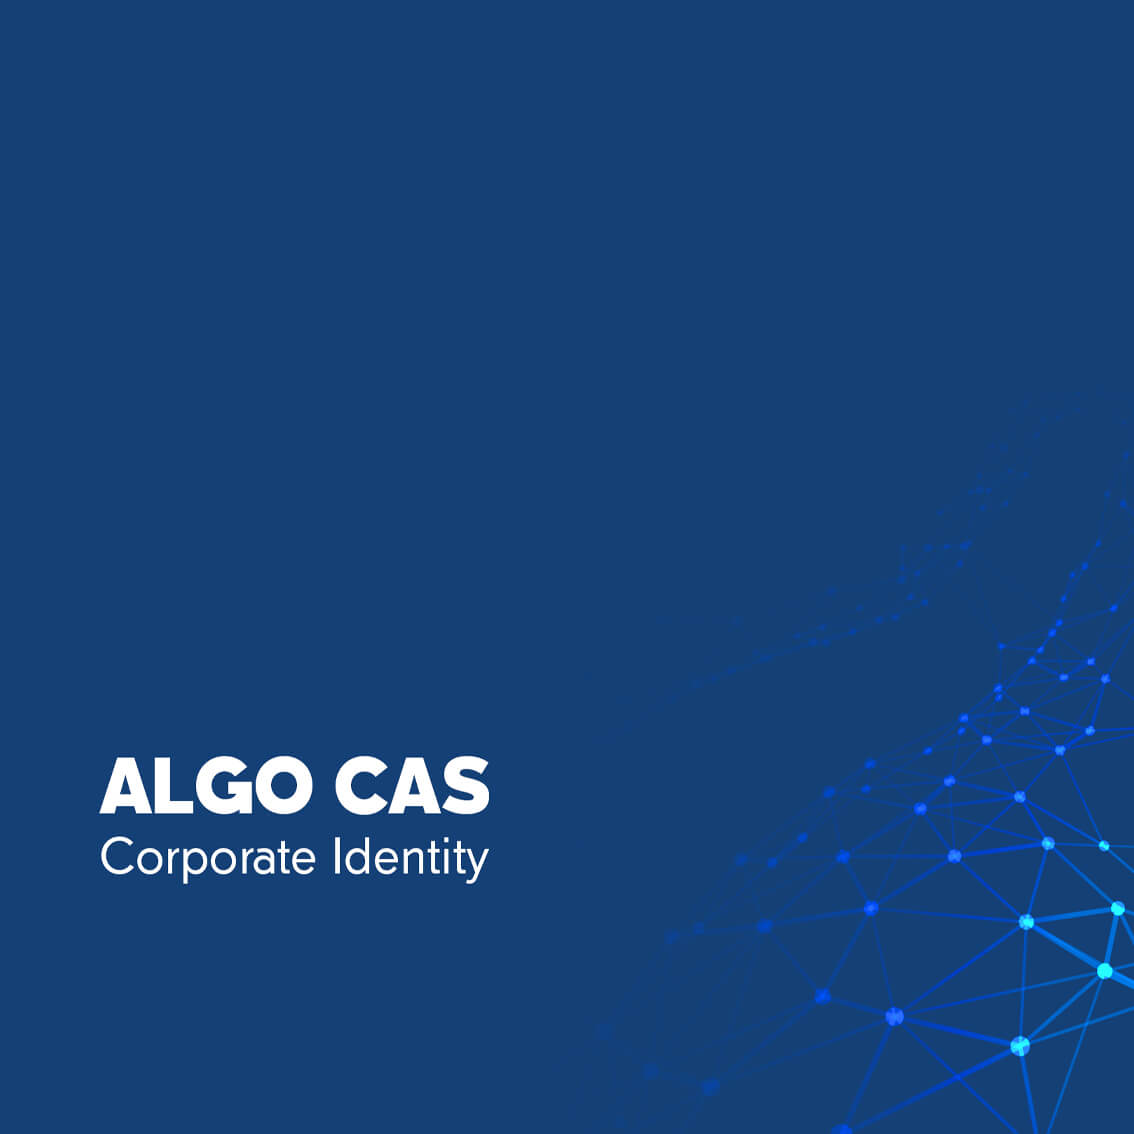 Algo Gas Identity